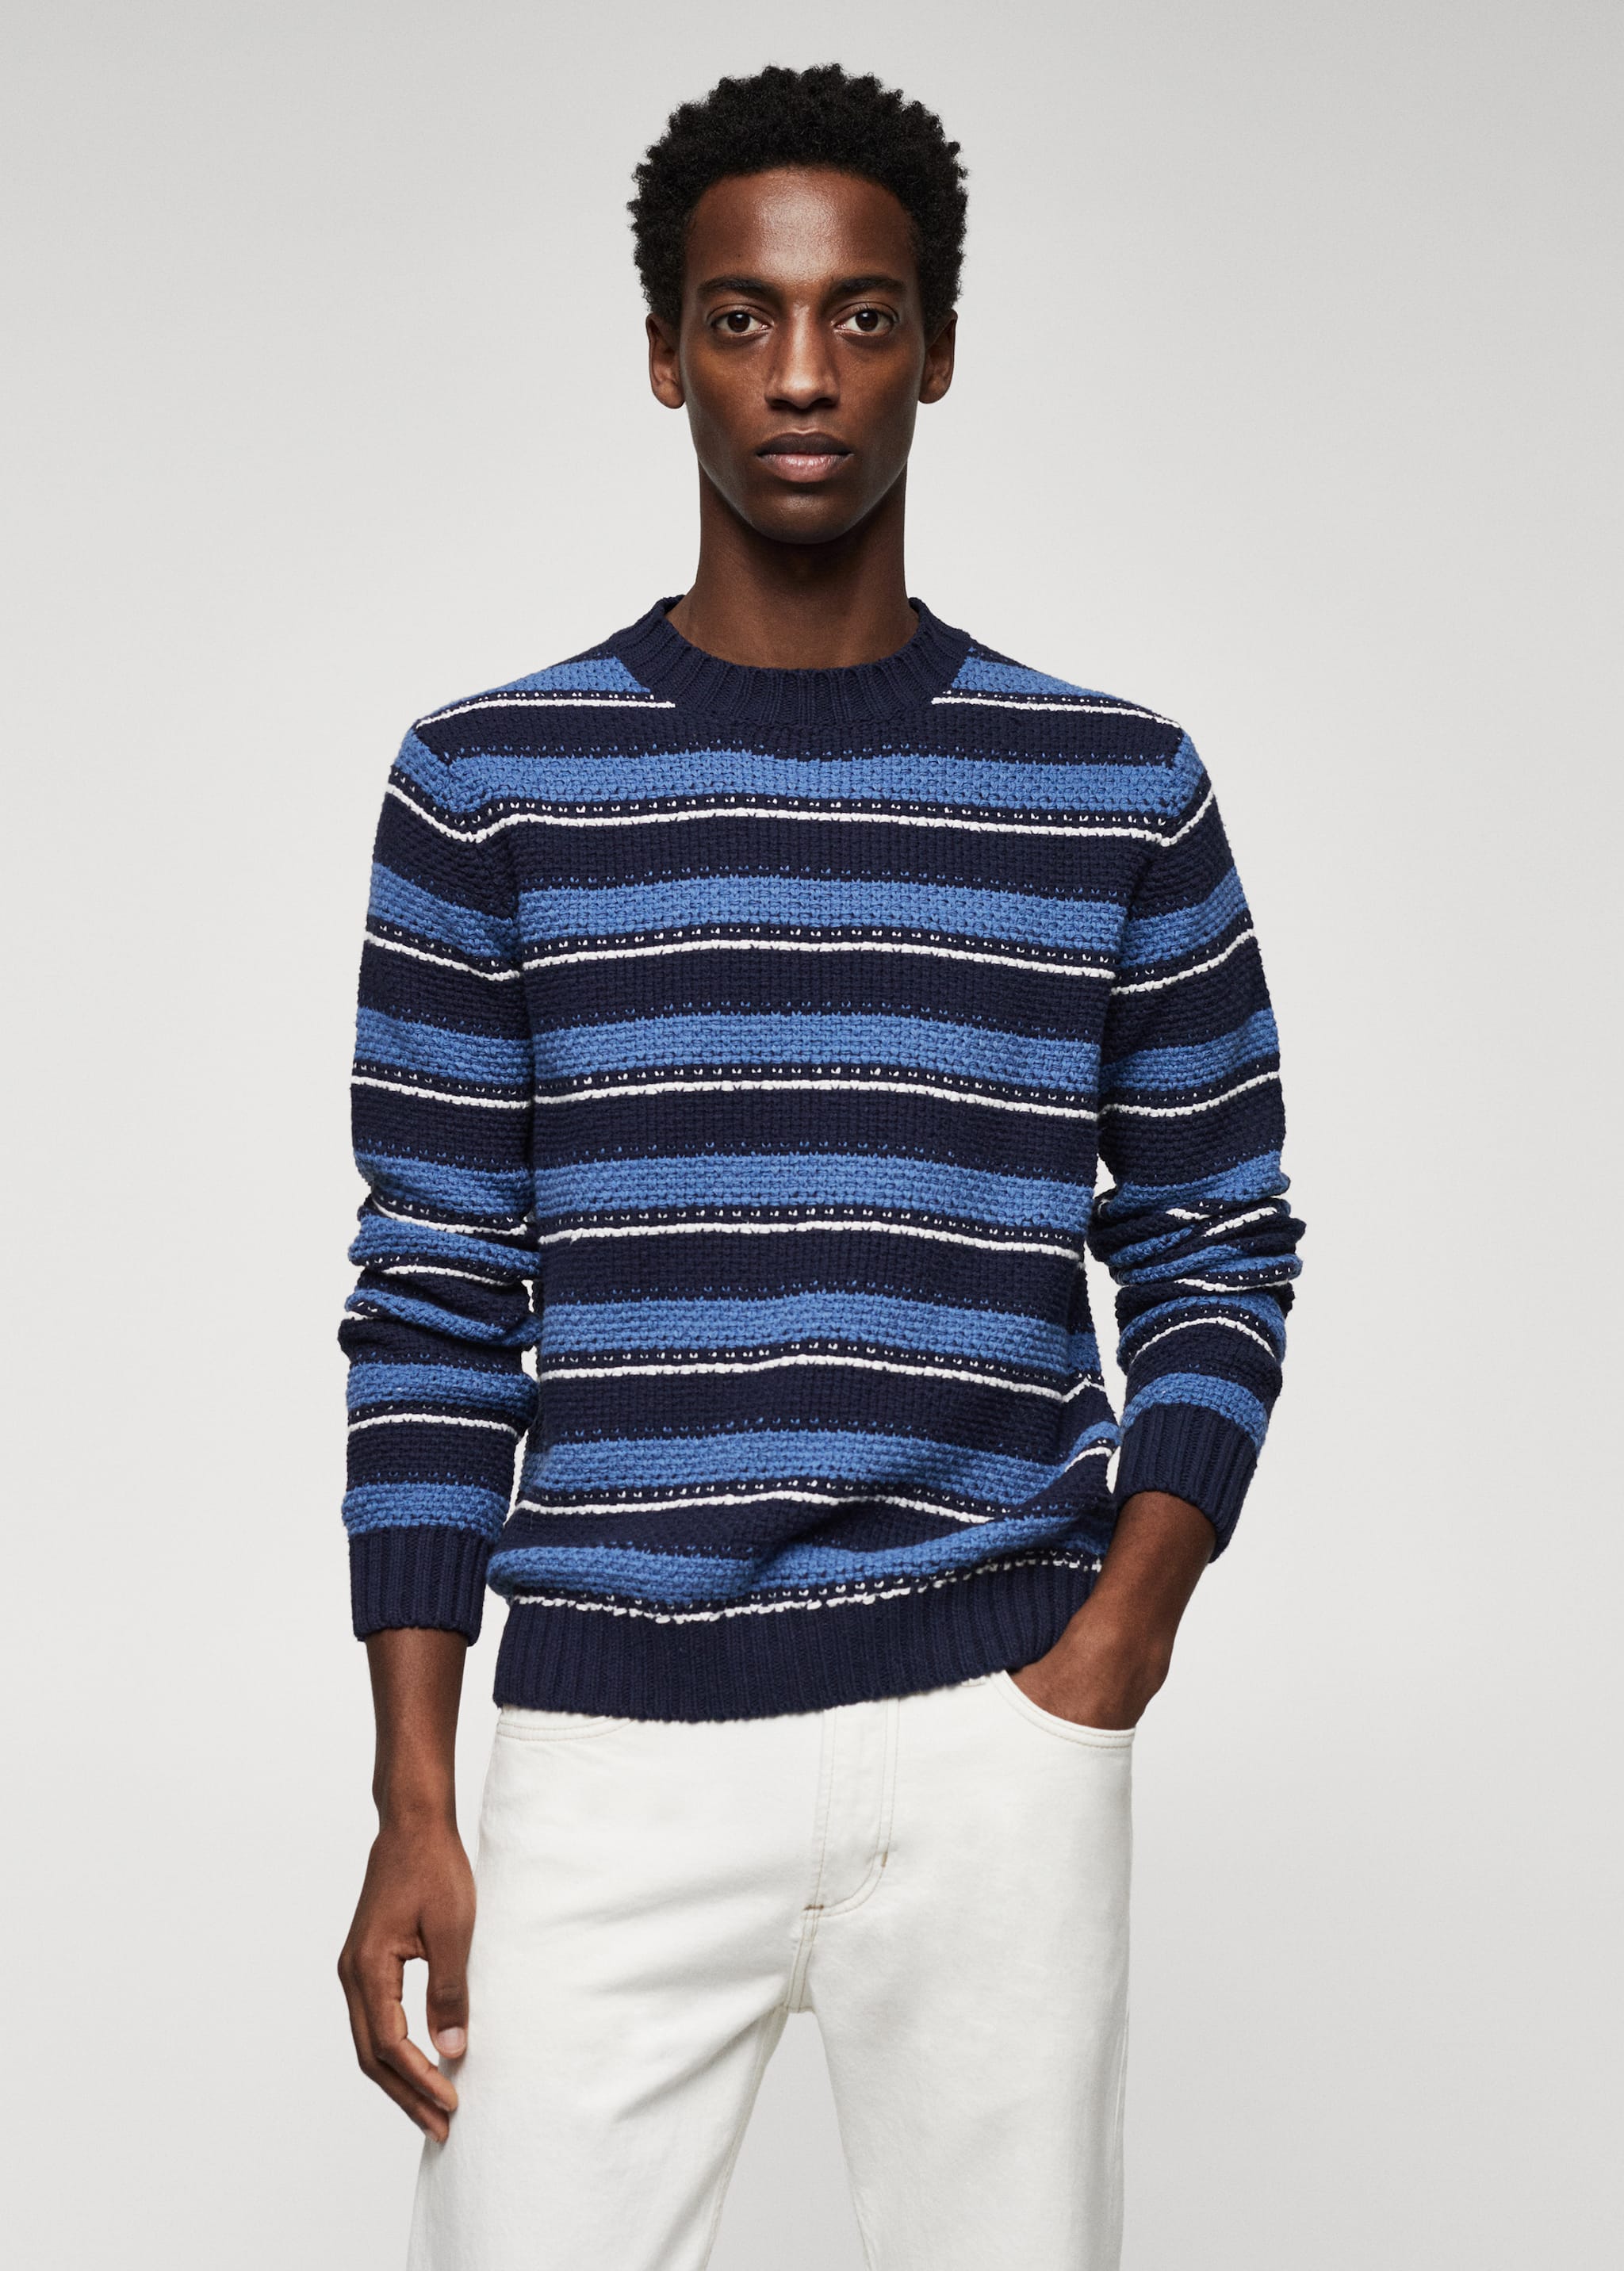 Striped knit sweater - Medium plane